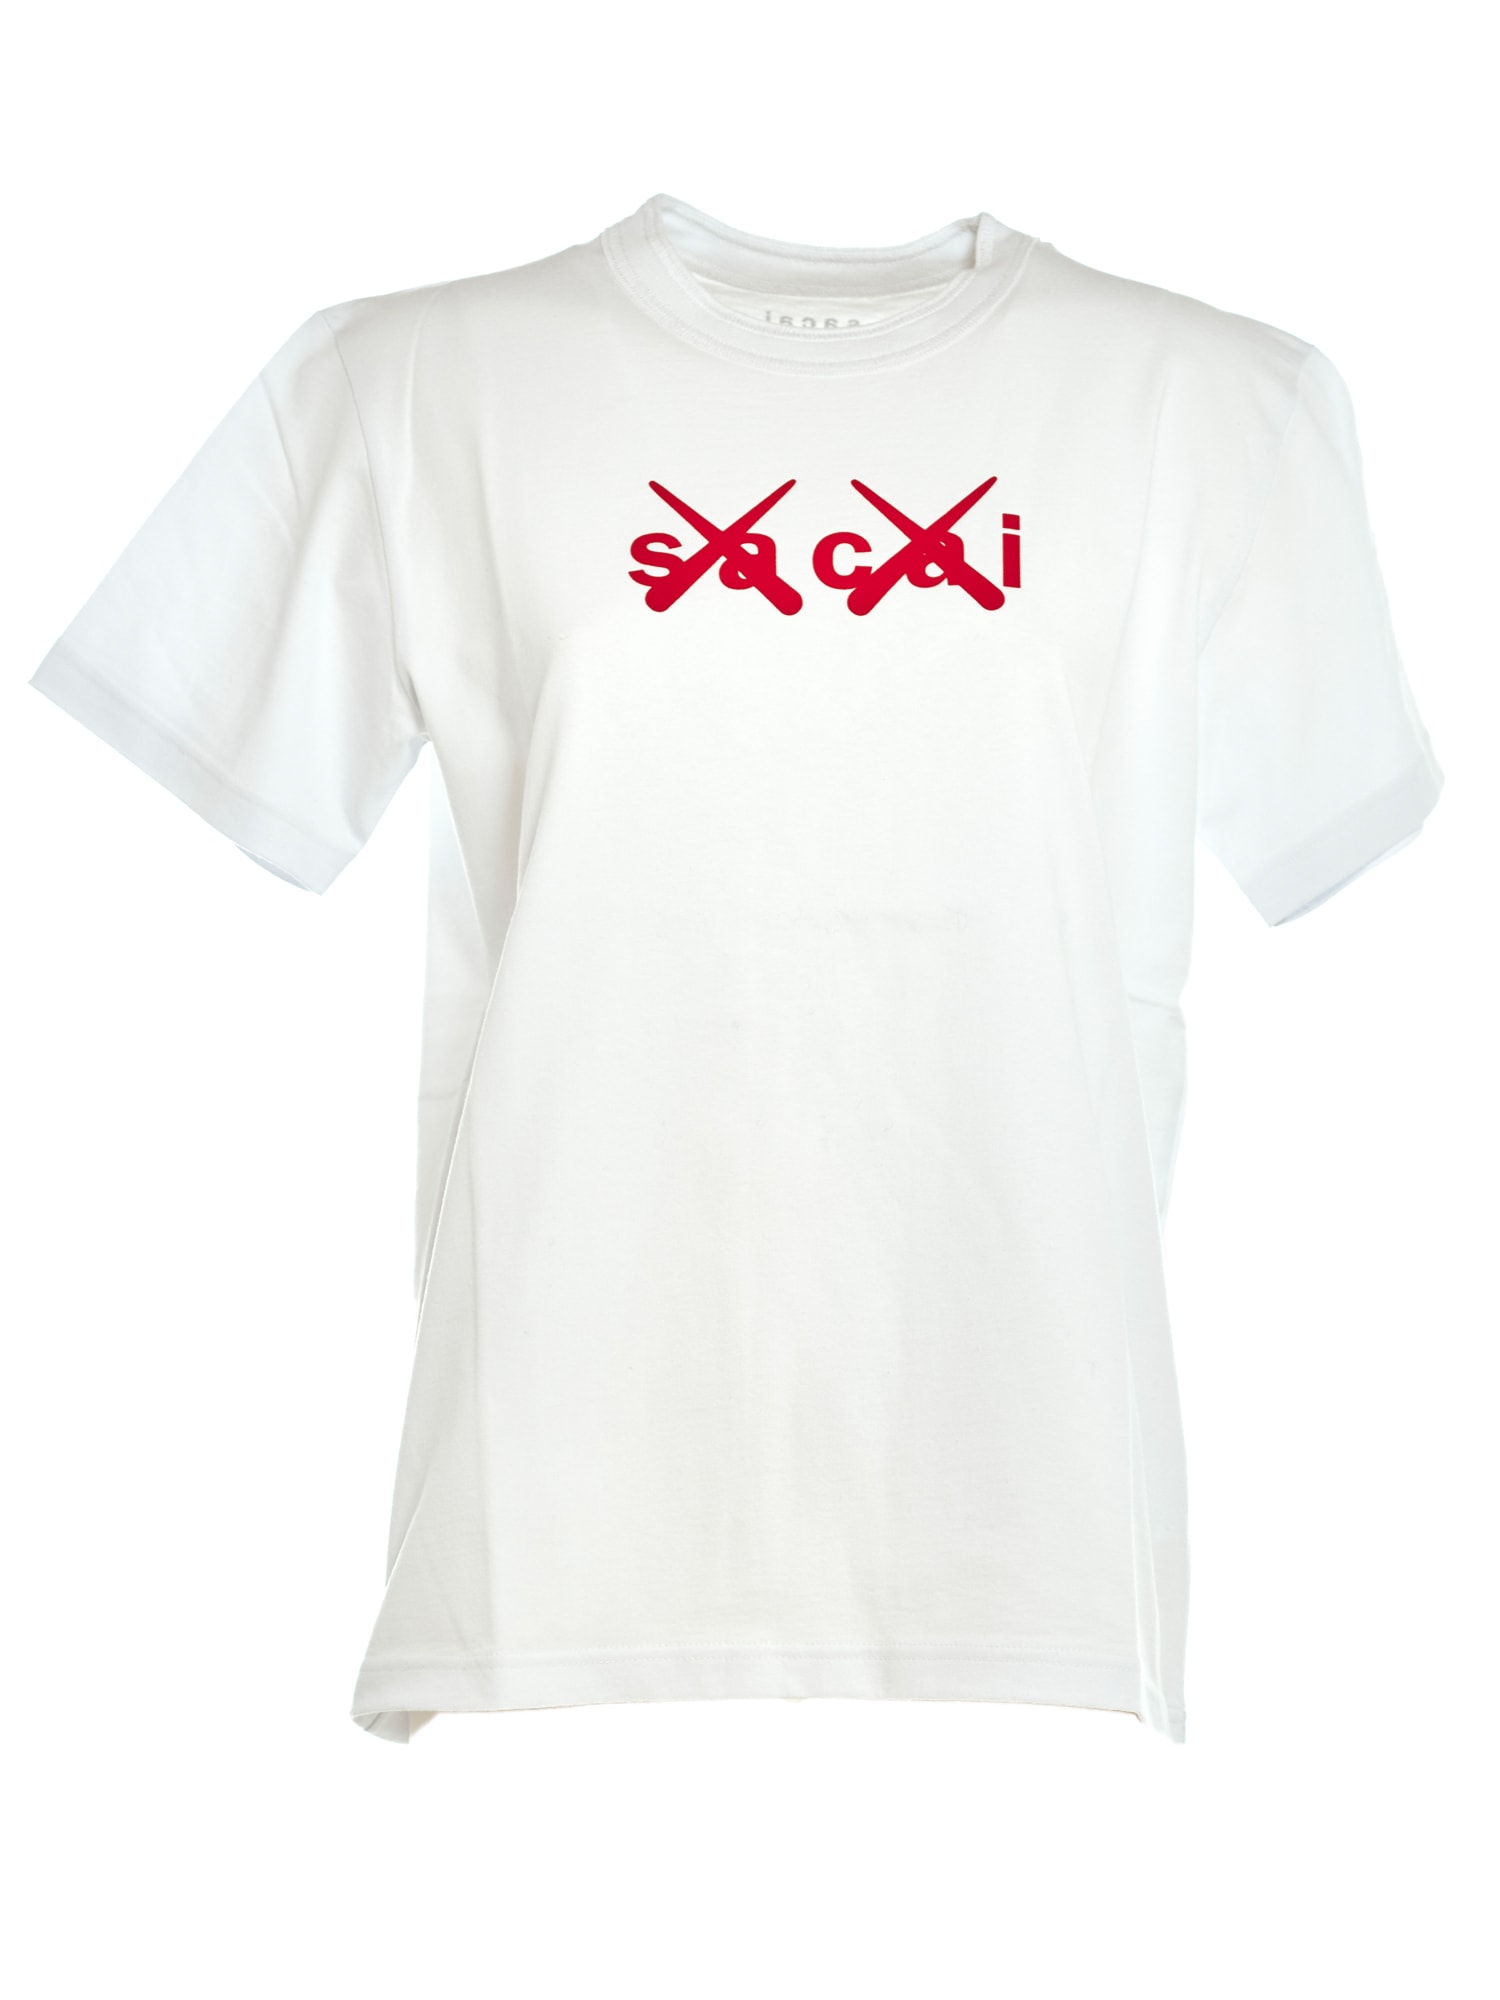 Sacai Kaws Flock Print T Shirt